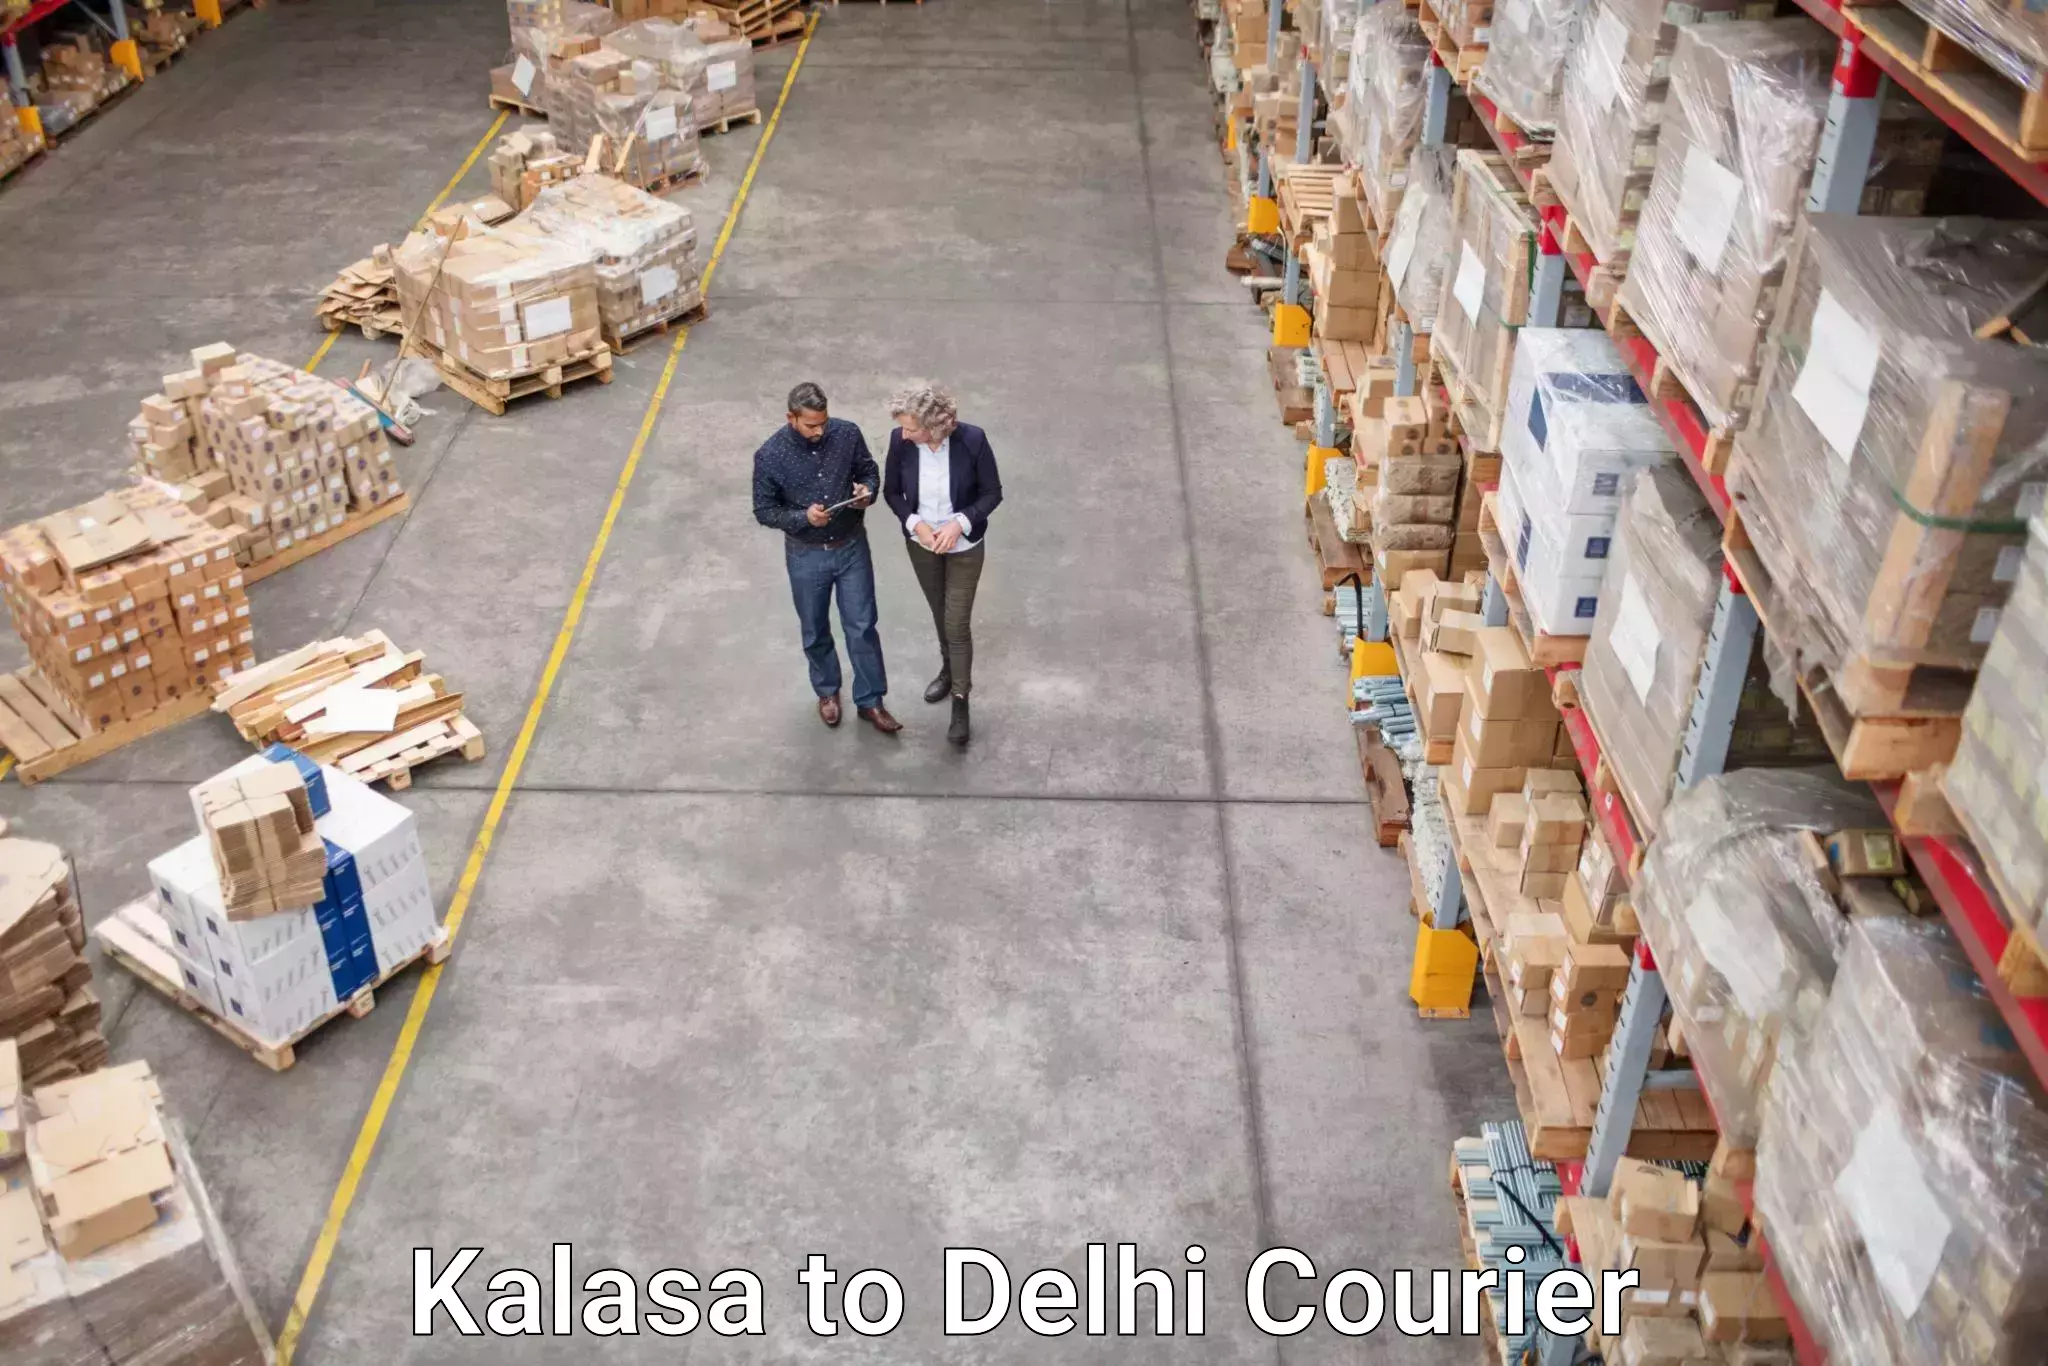 Courier service innovation Kalasa to NCR